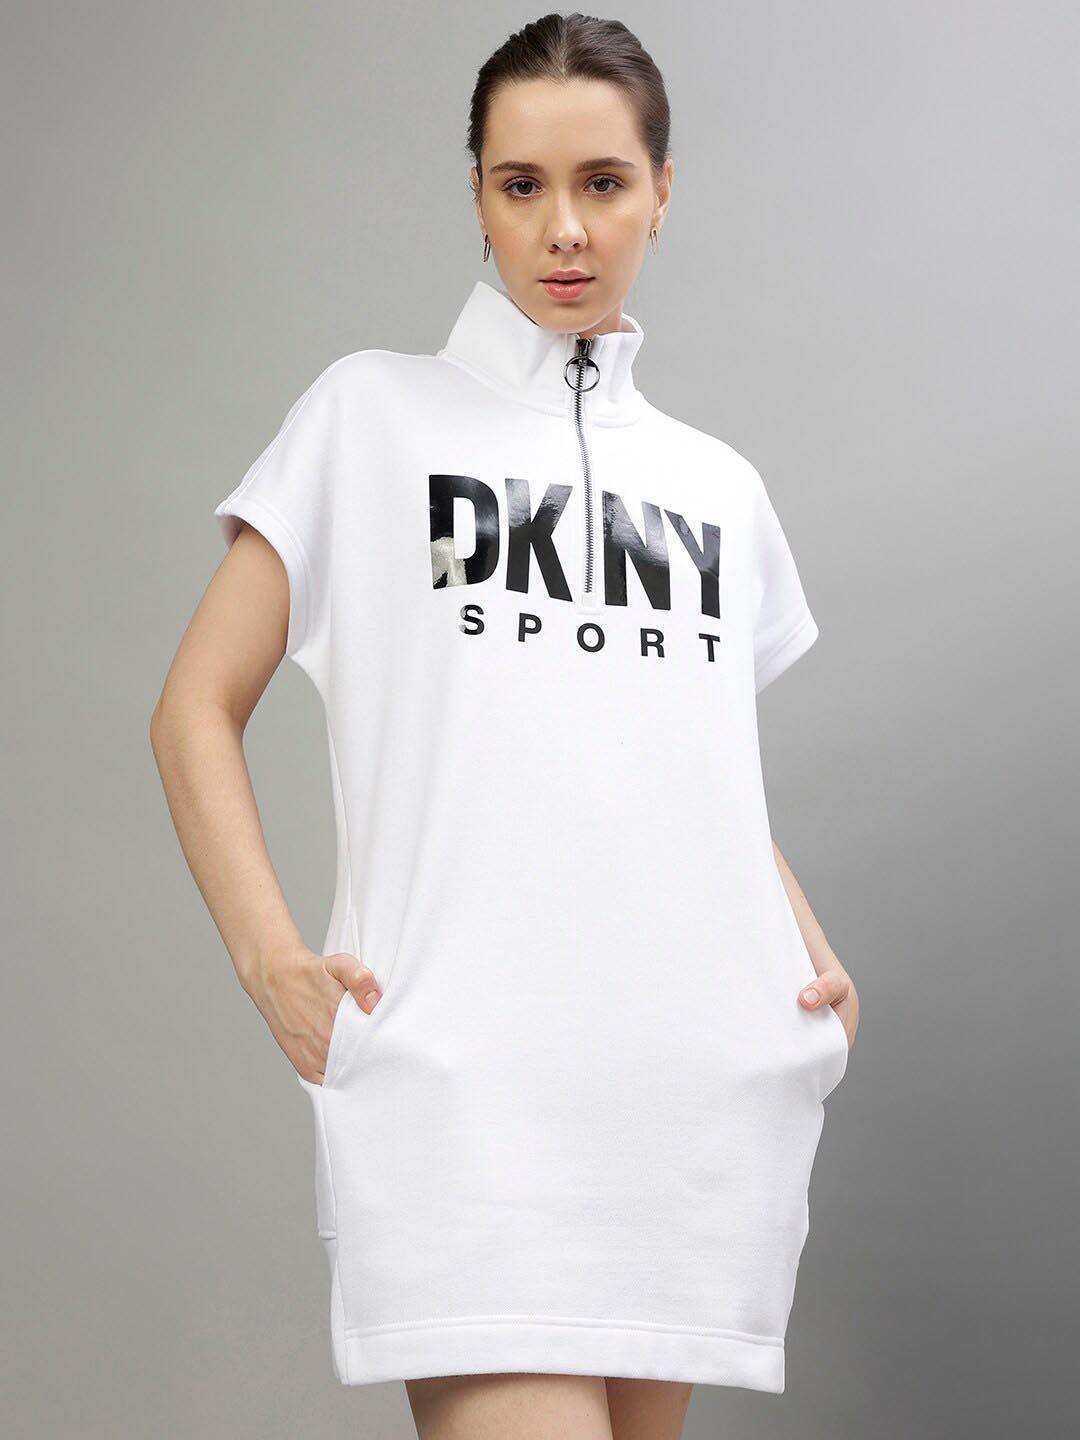 dkny printed high neck jumper dress